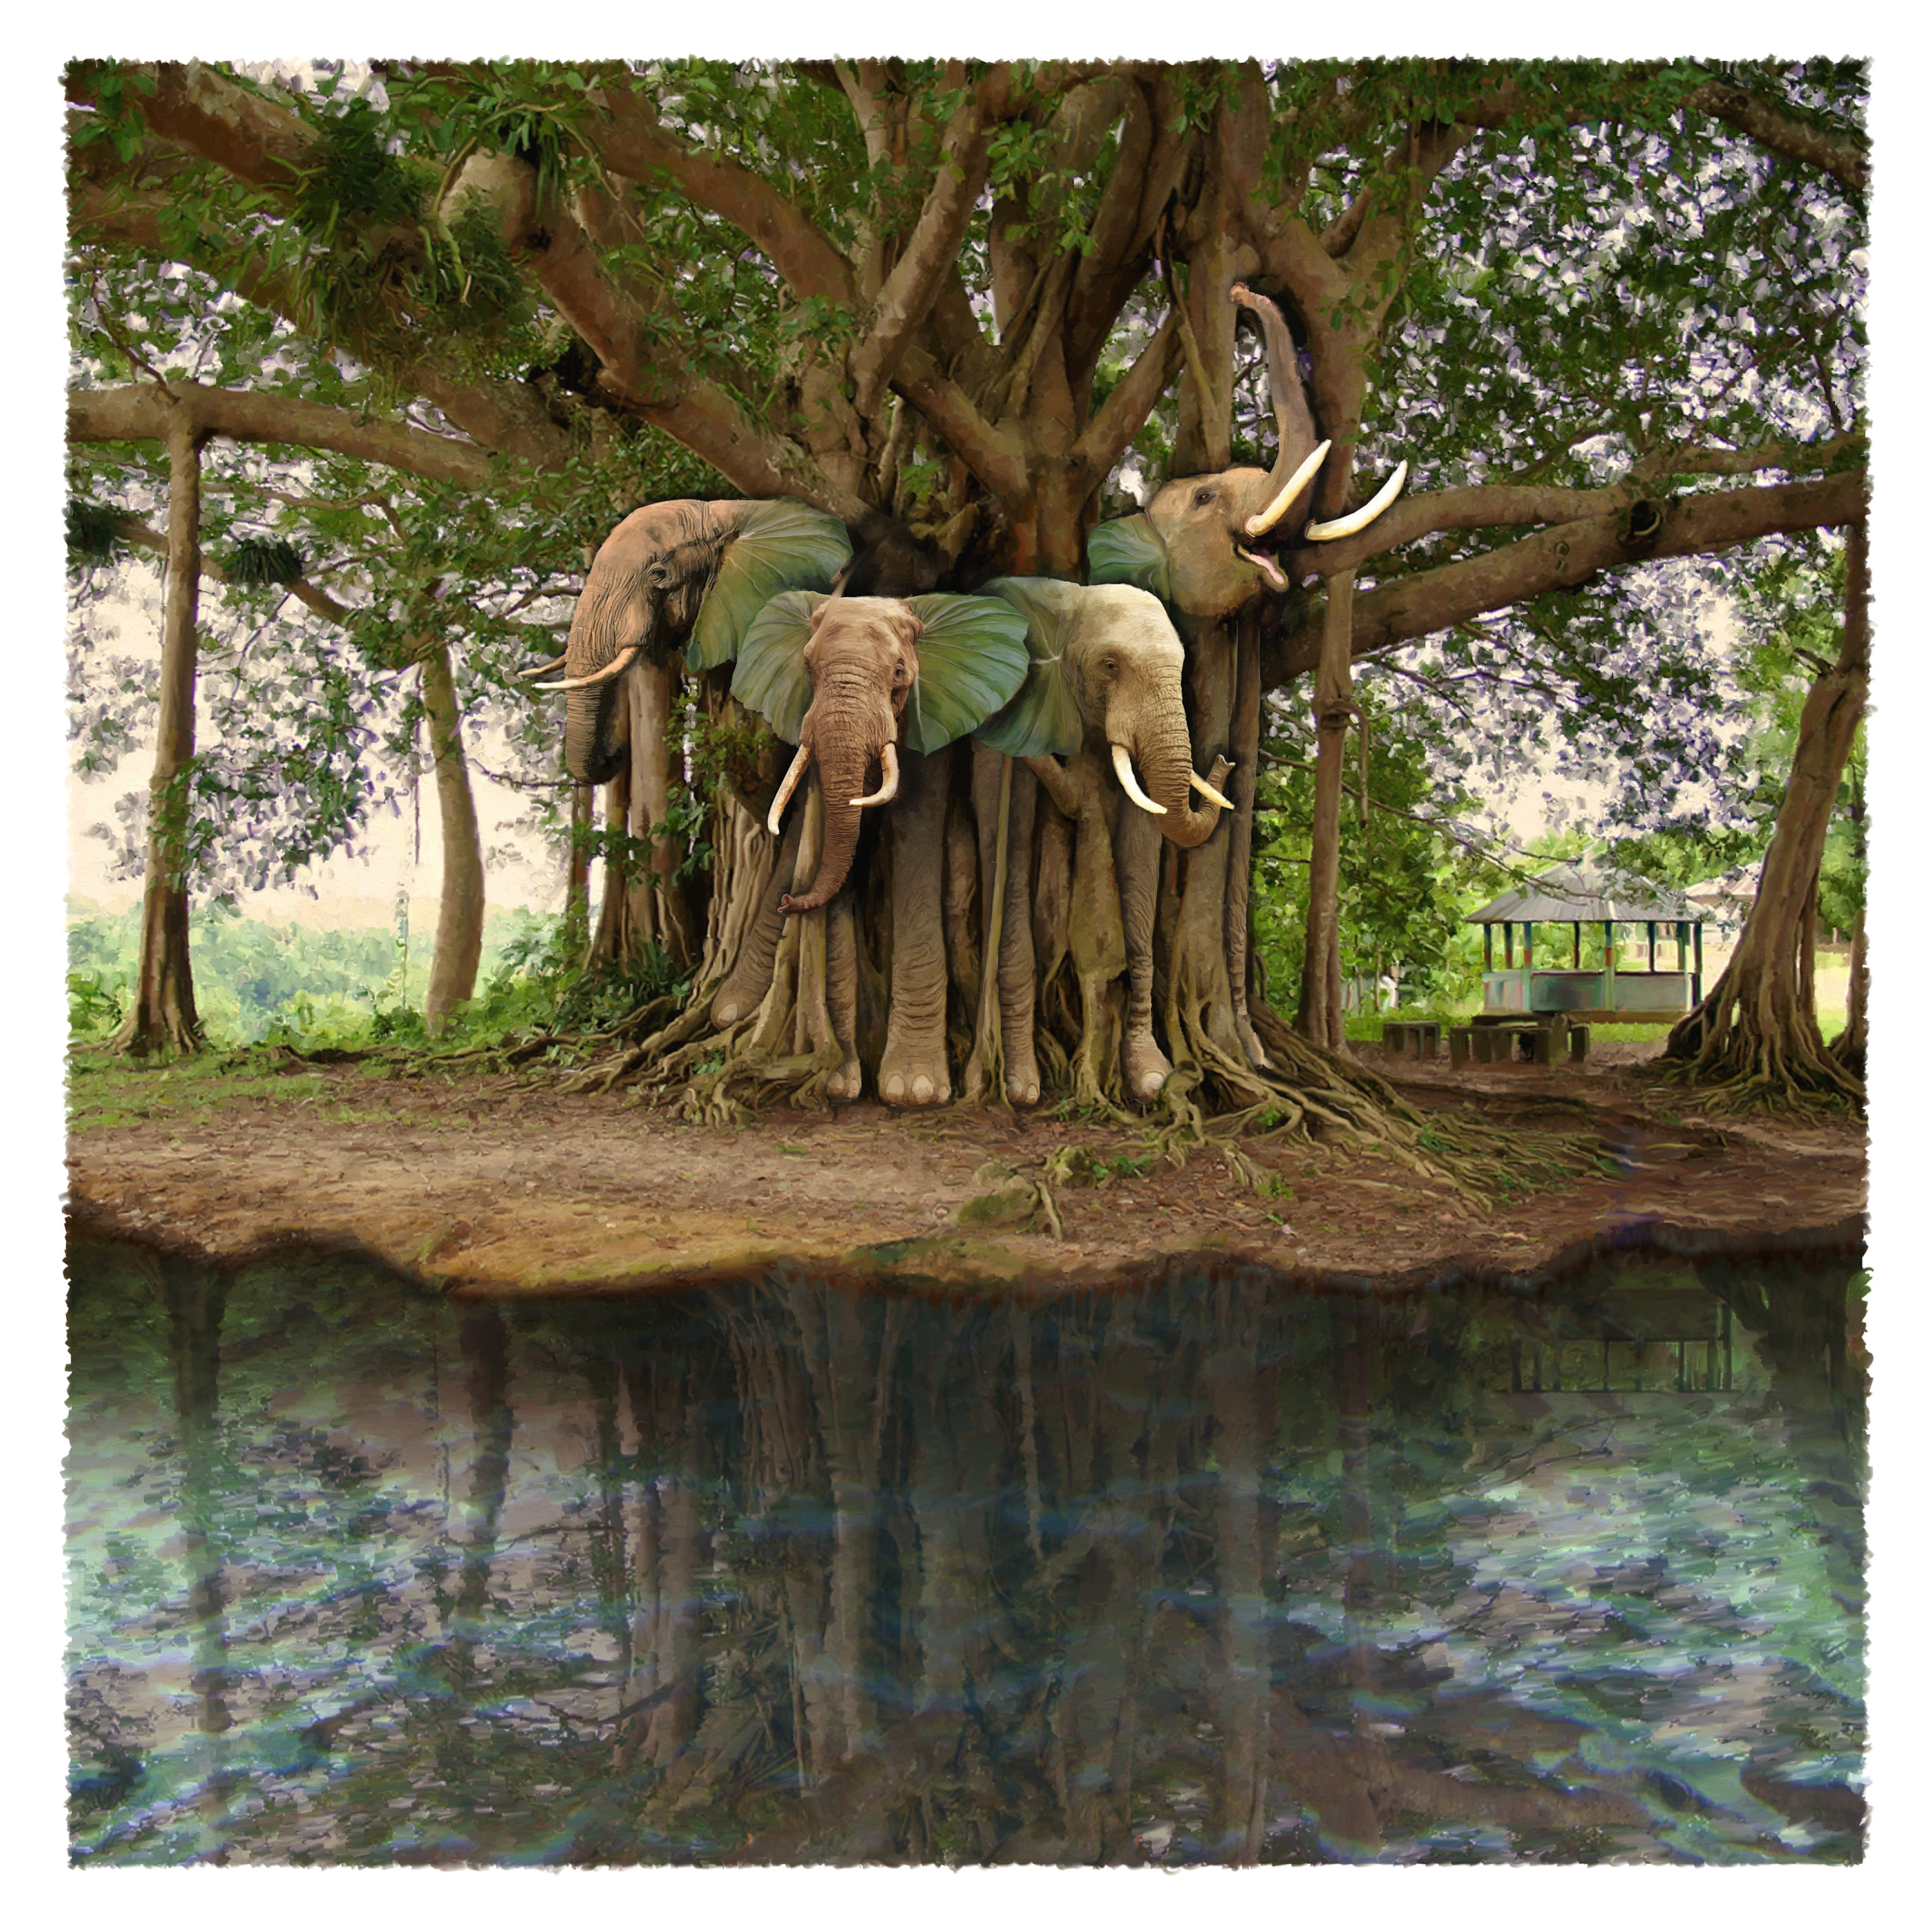 Island of lost elephants by76eg